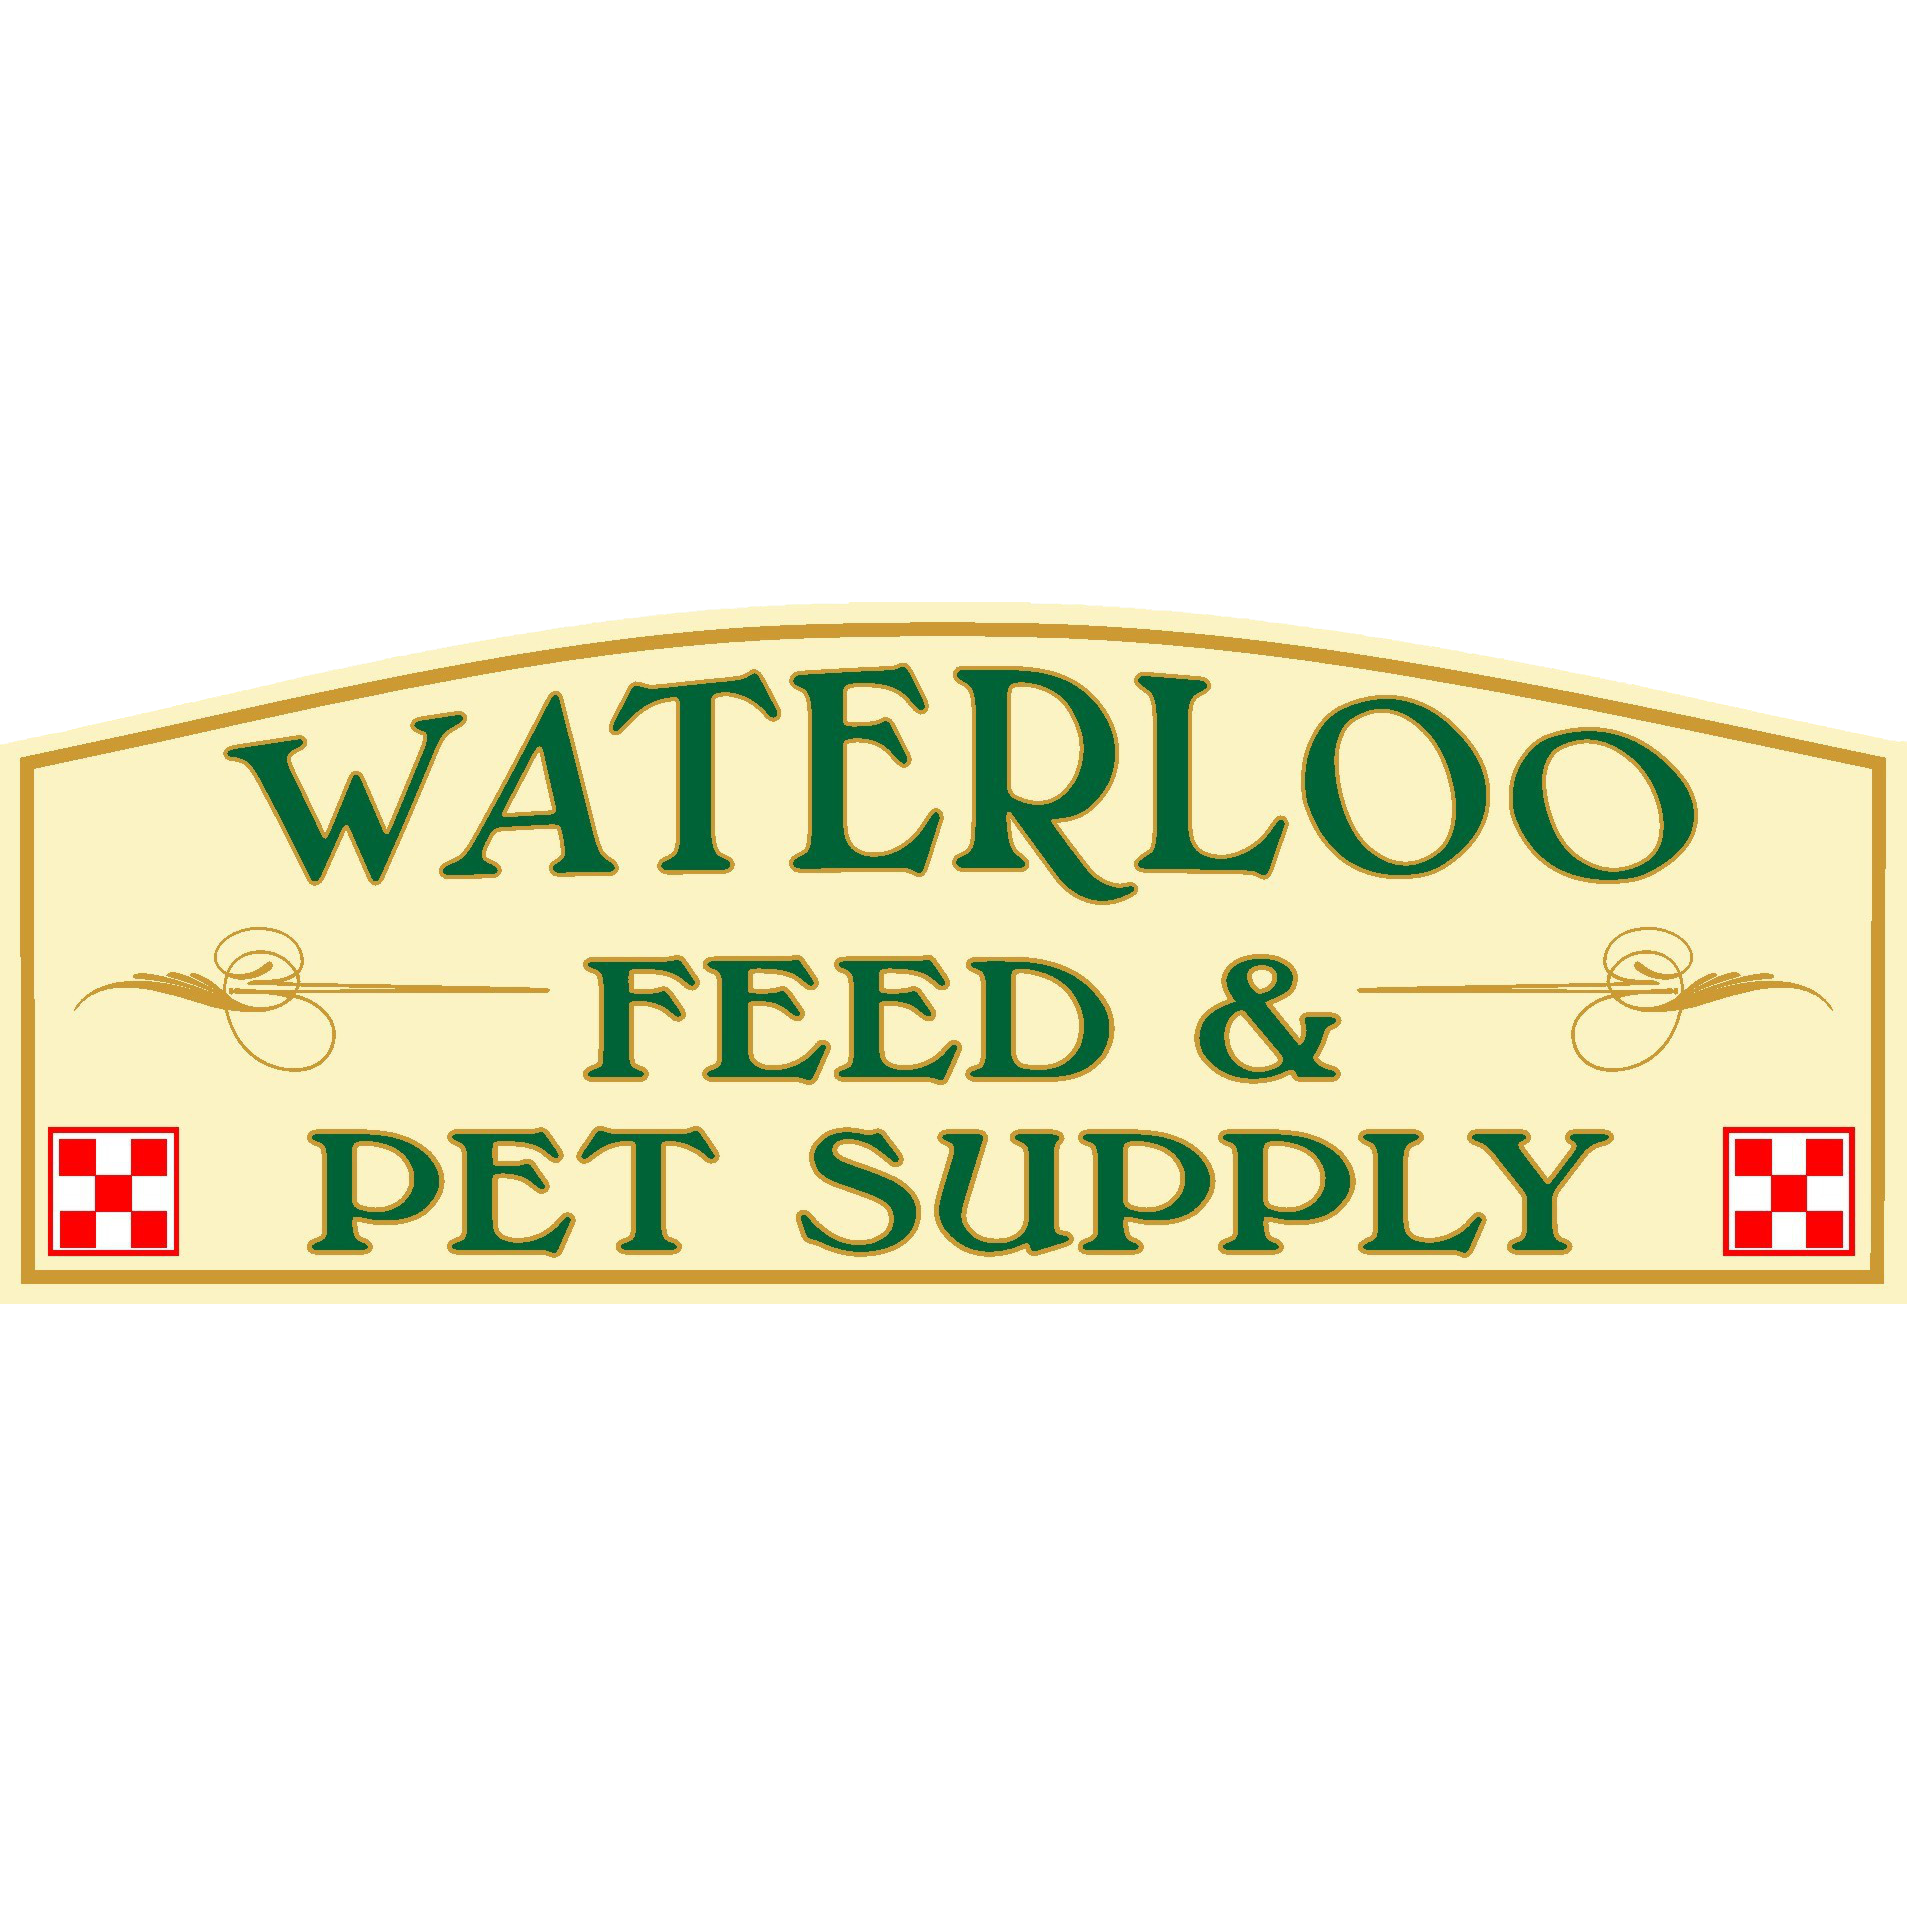 waterloo feed & pet supply